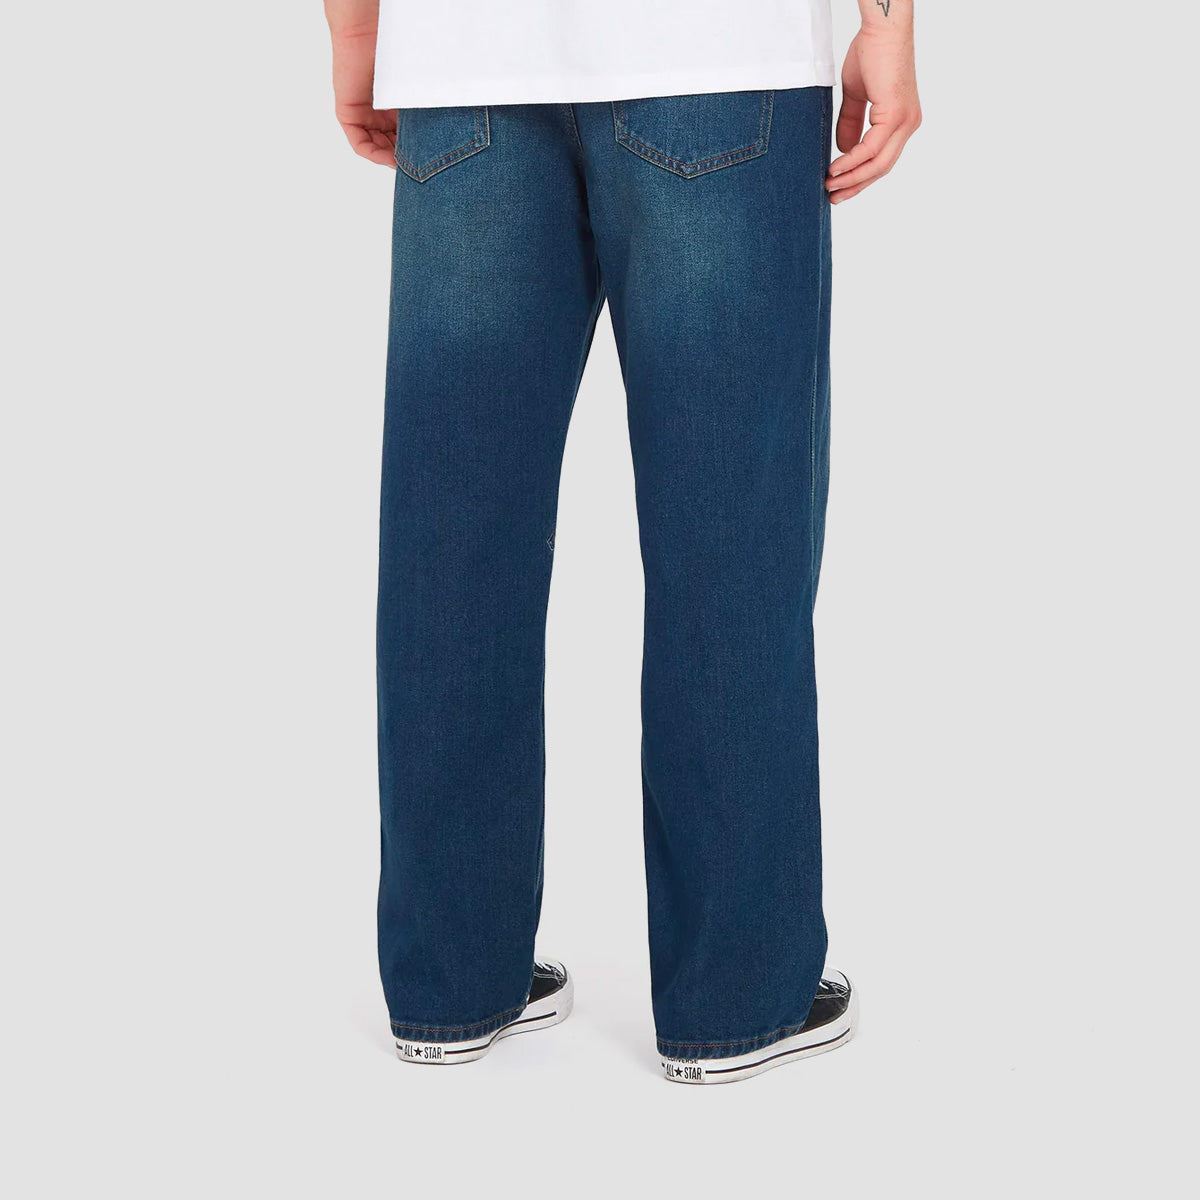 Volcom Nailer Denim Jeans Matured Blue